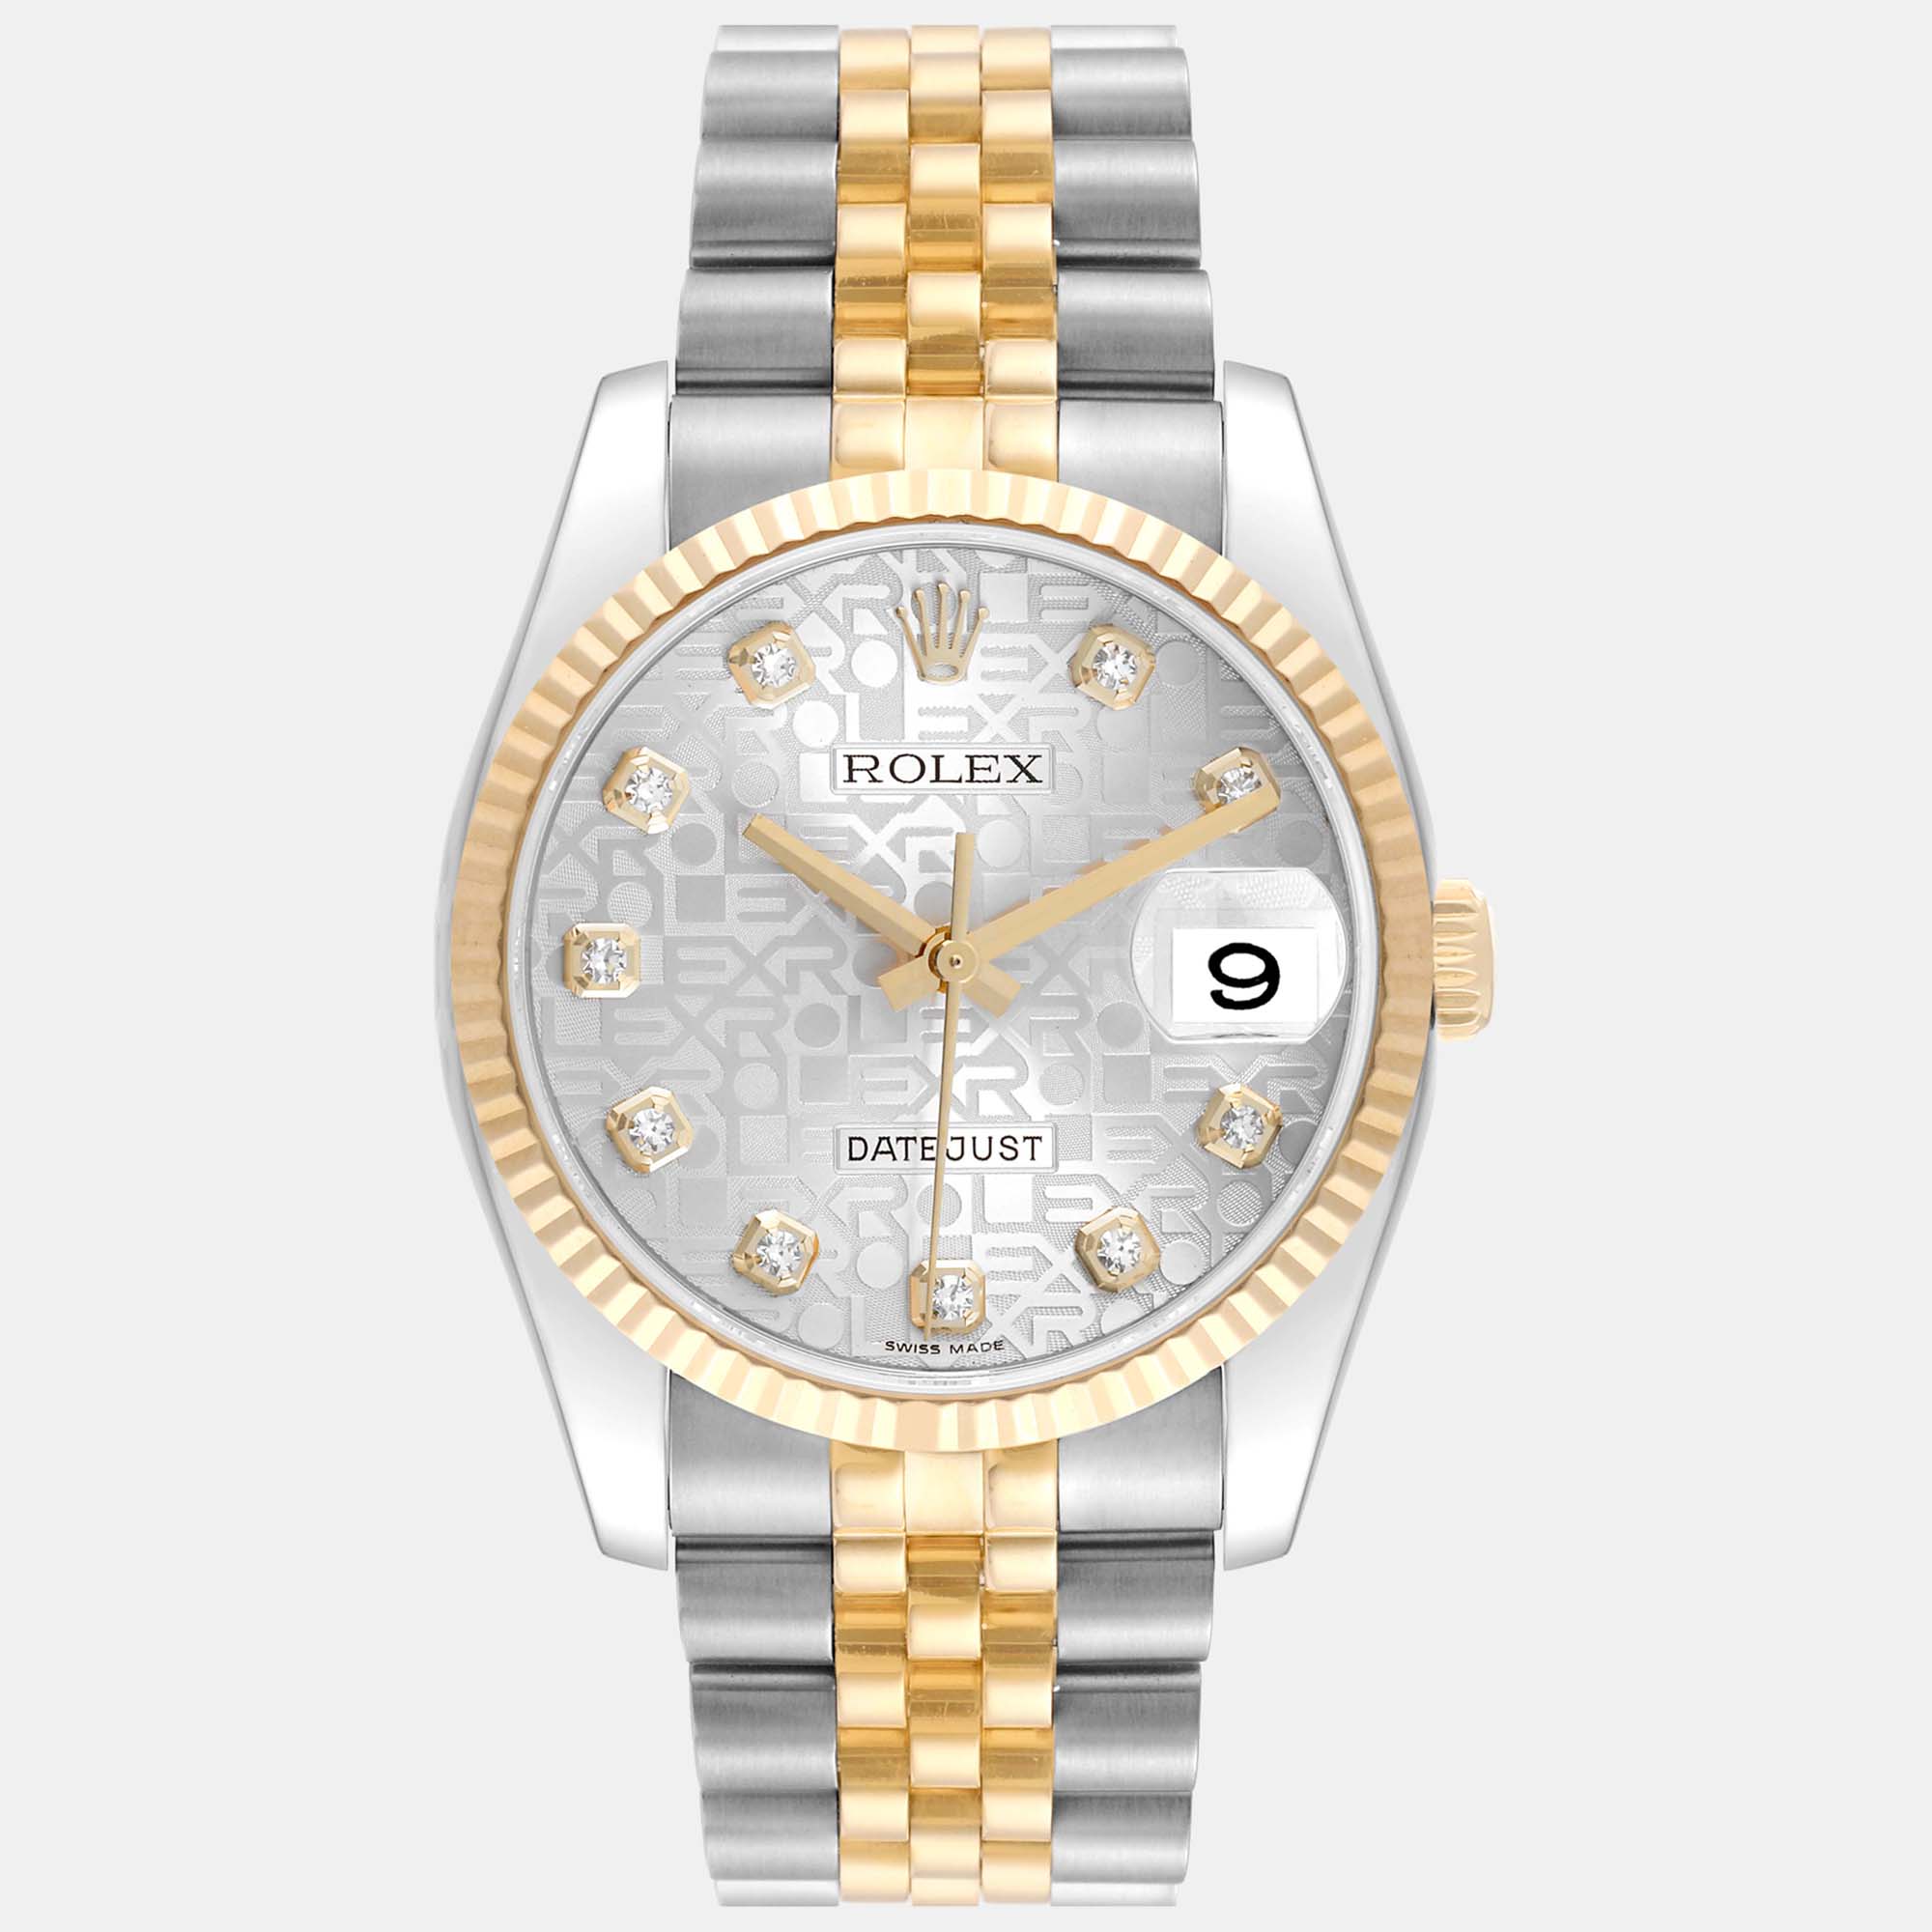 Rolex datejust steel yellow gold diamond dial men's watch 36 mm